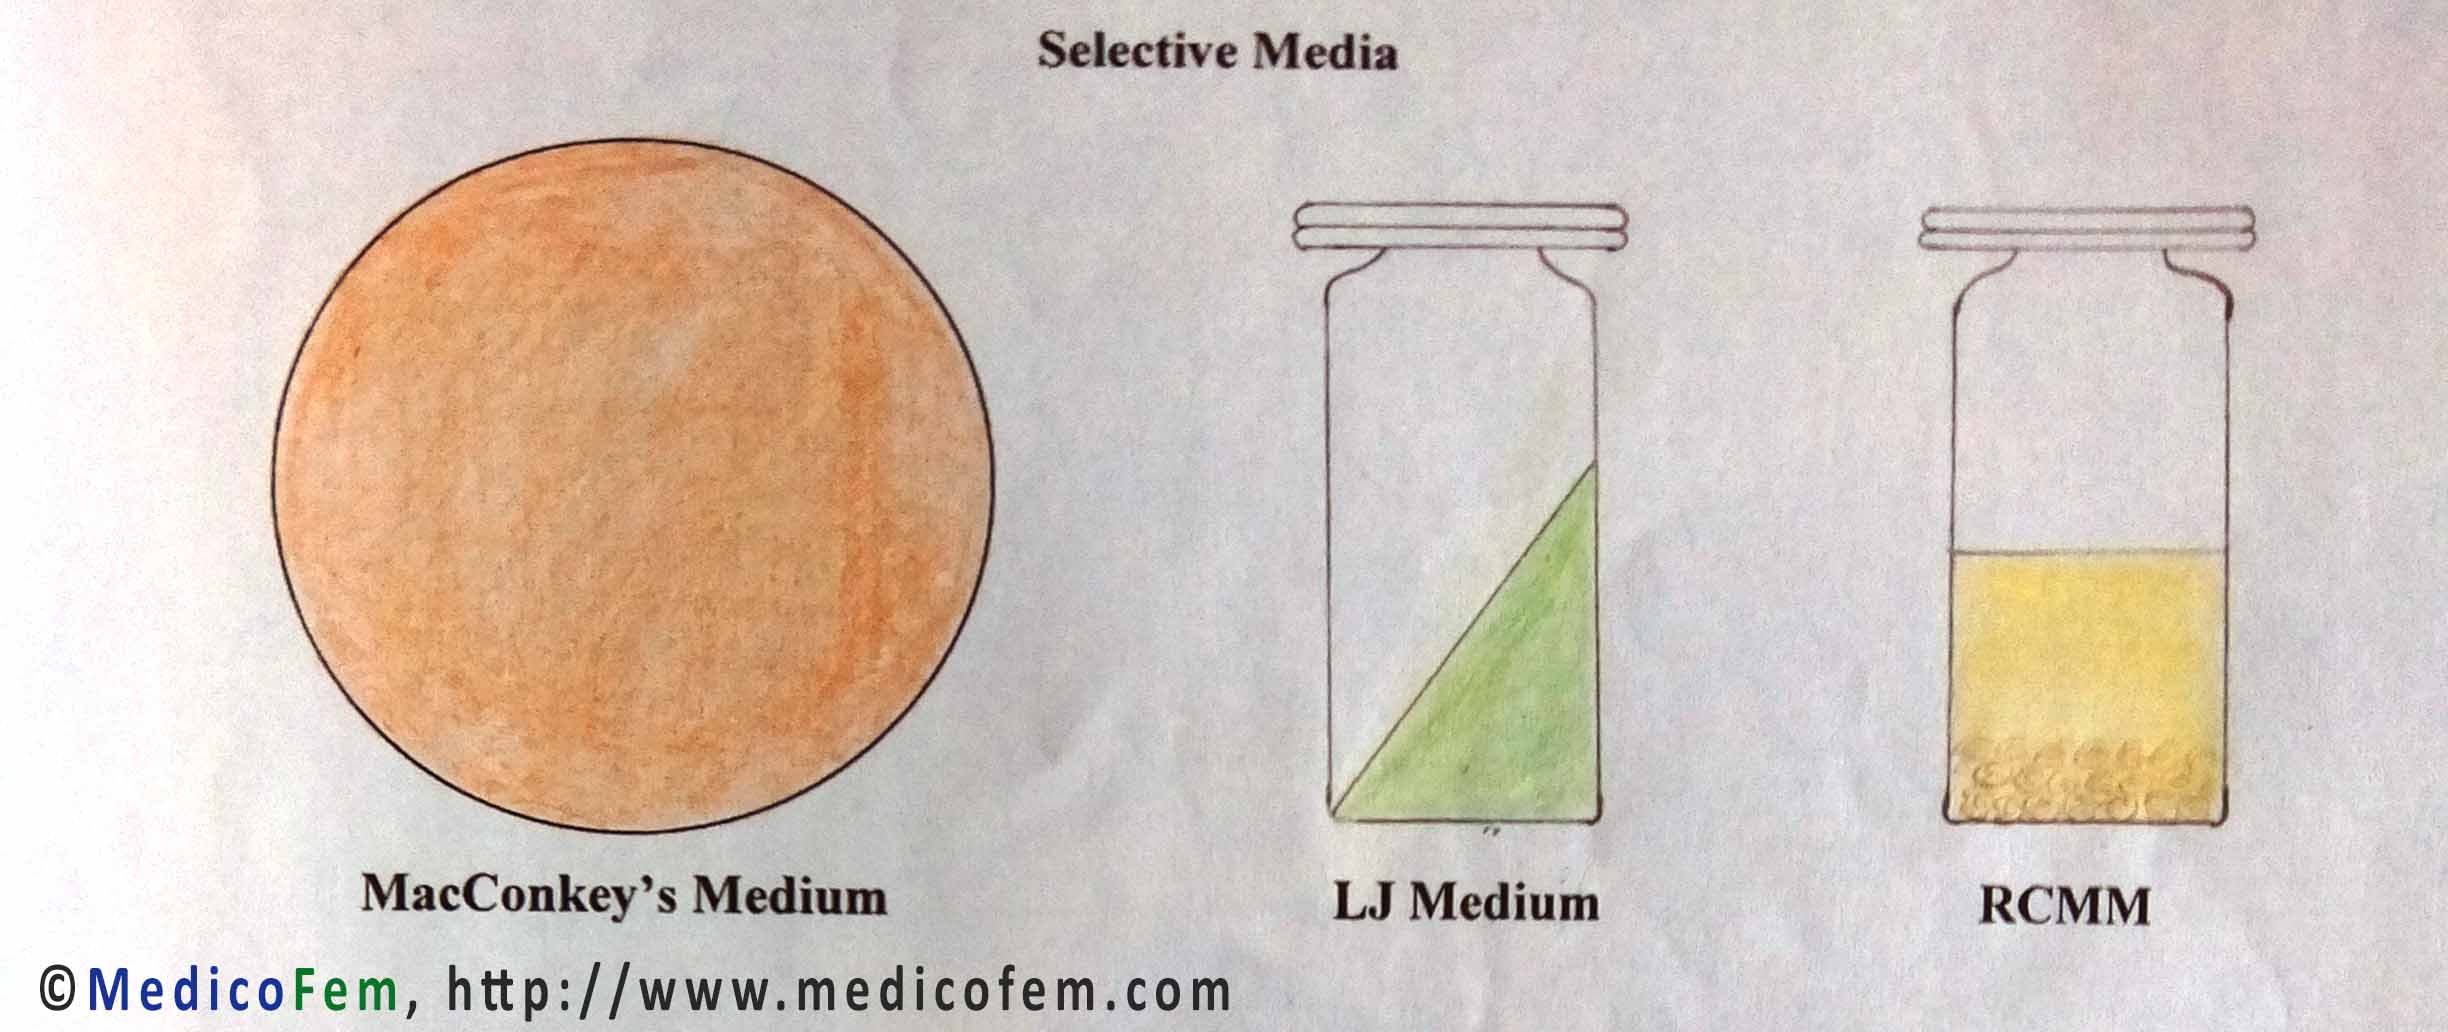 SelectiveMedia